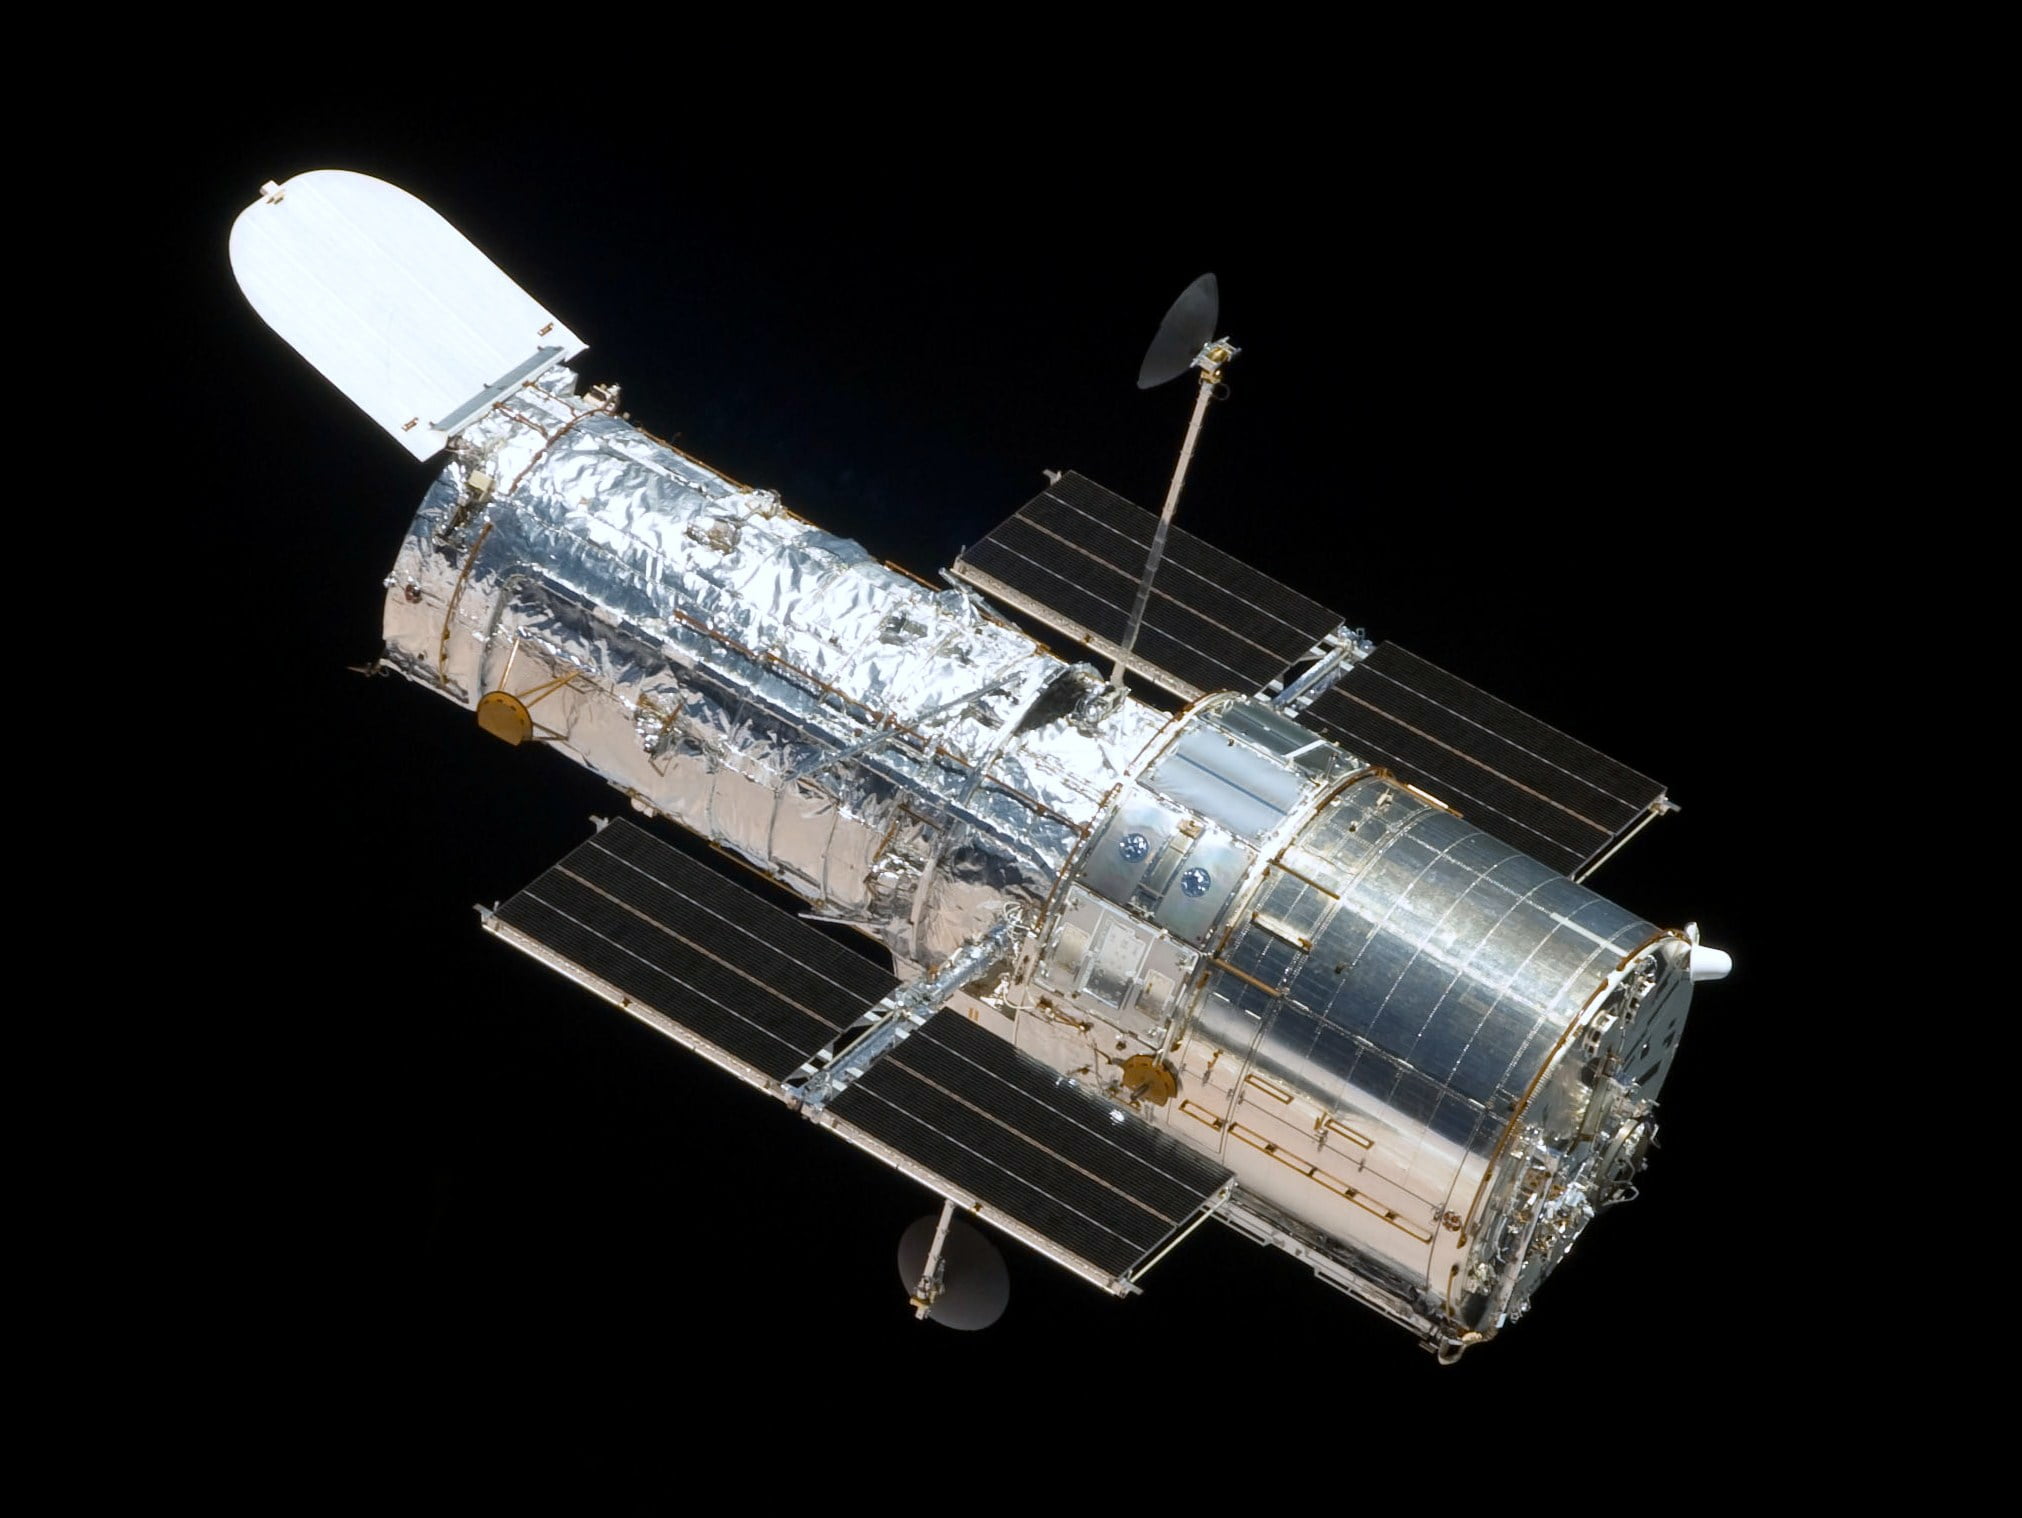 Hubble Space Telescope 2